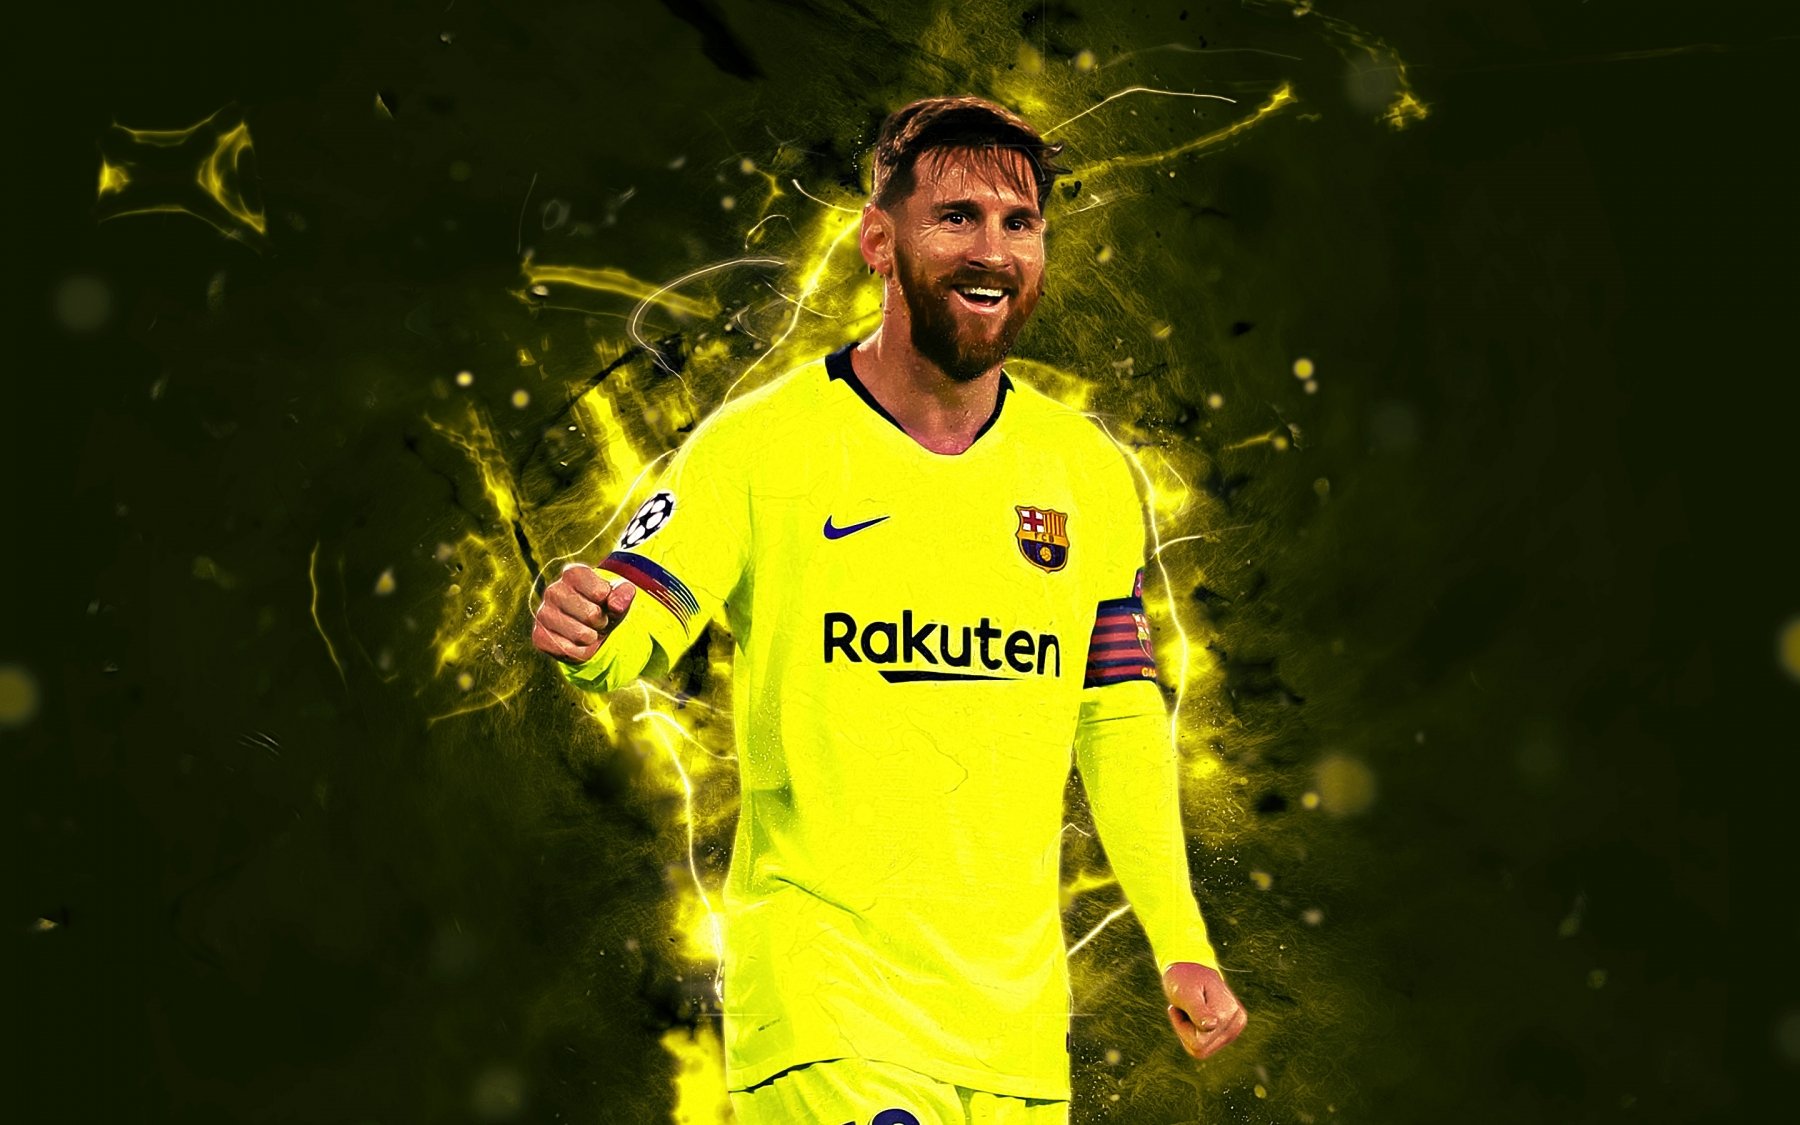 Messi Full HD Wallpapers - Wallpaper Cave